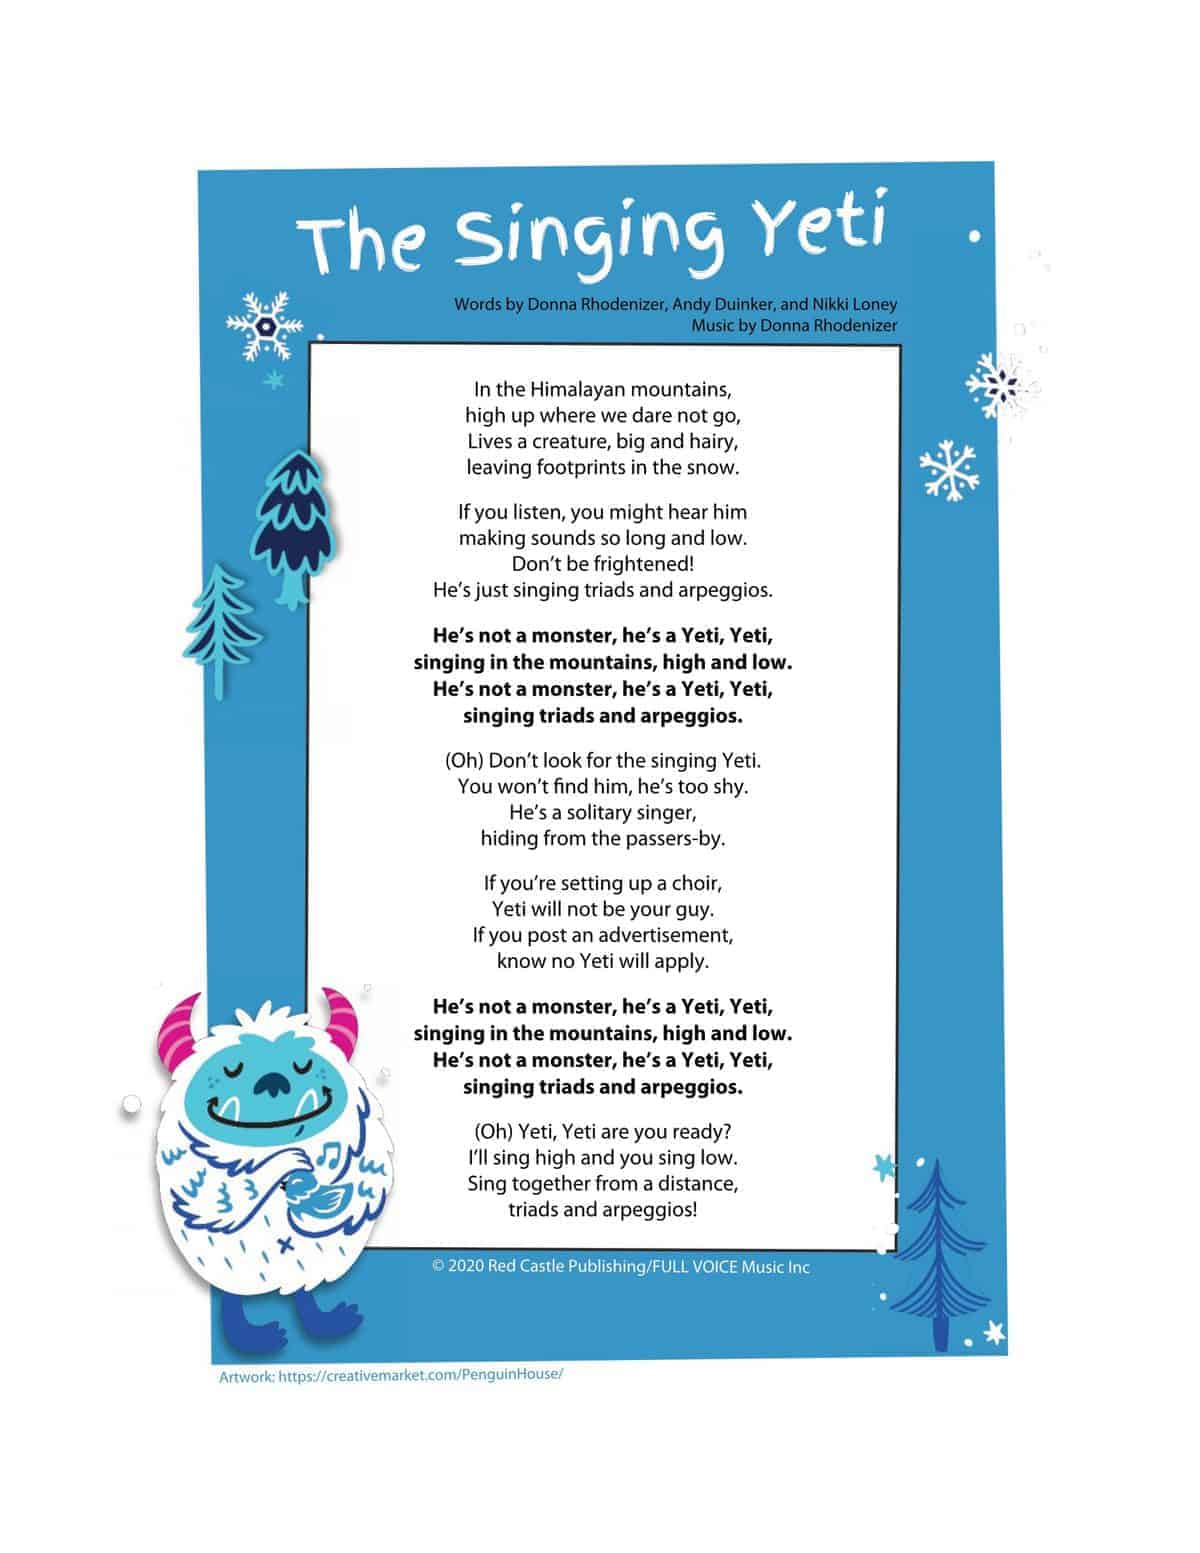 The Singing Yeti by Rhodenizer/Duinker/Loney